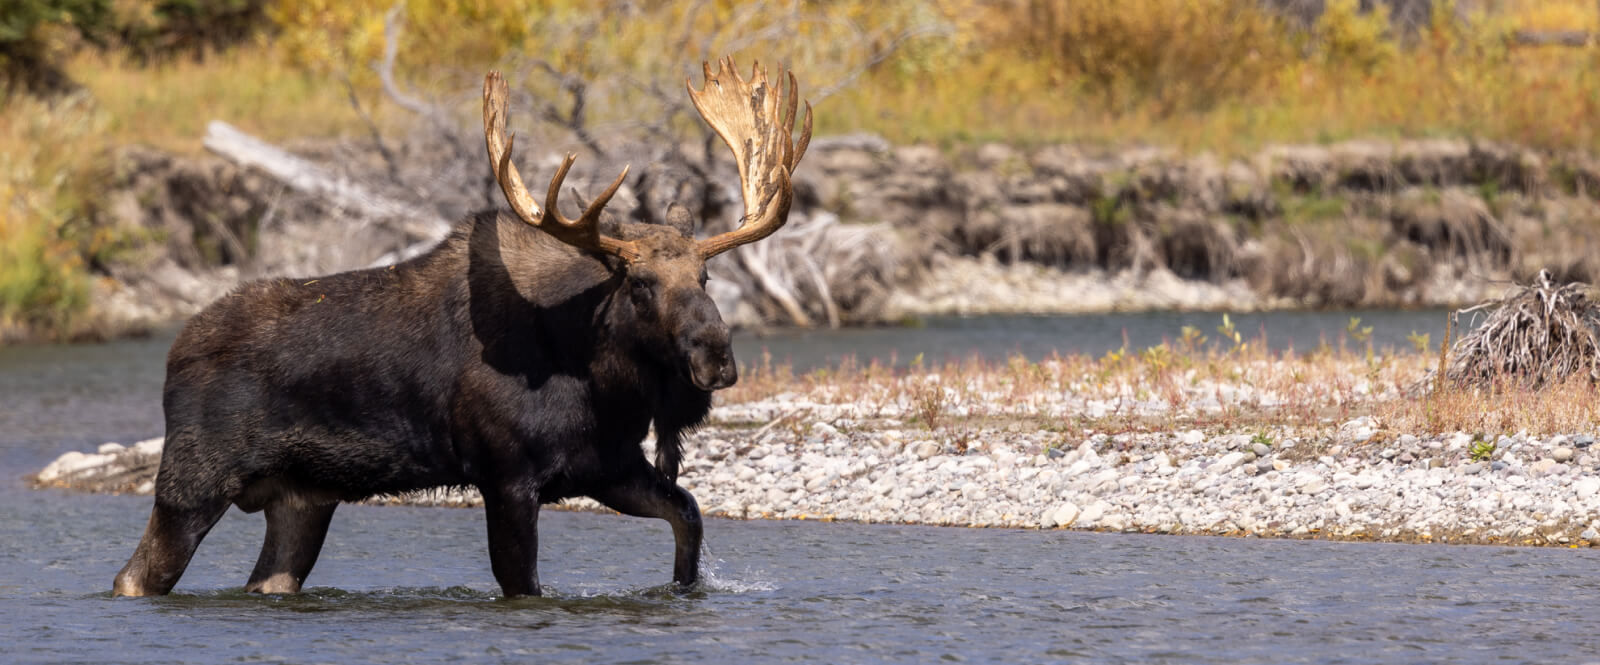 A moose walking through a shallow river